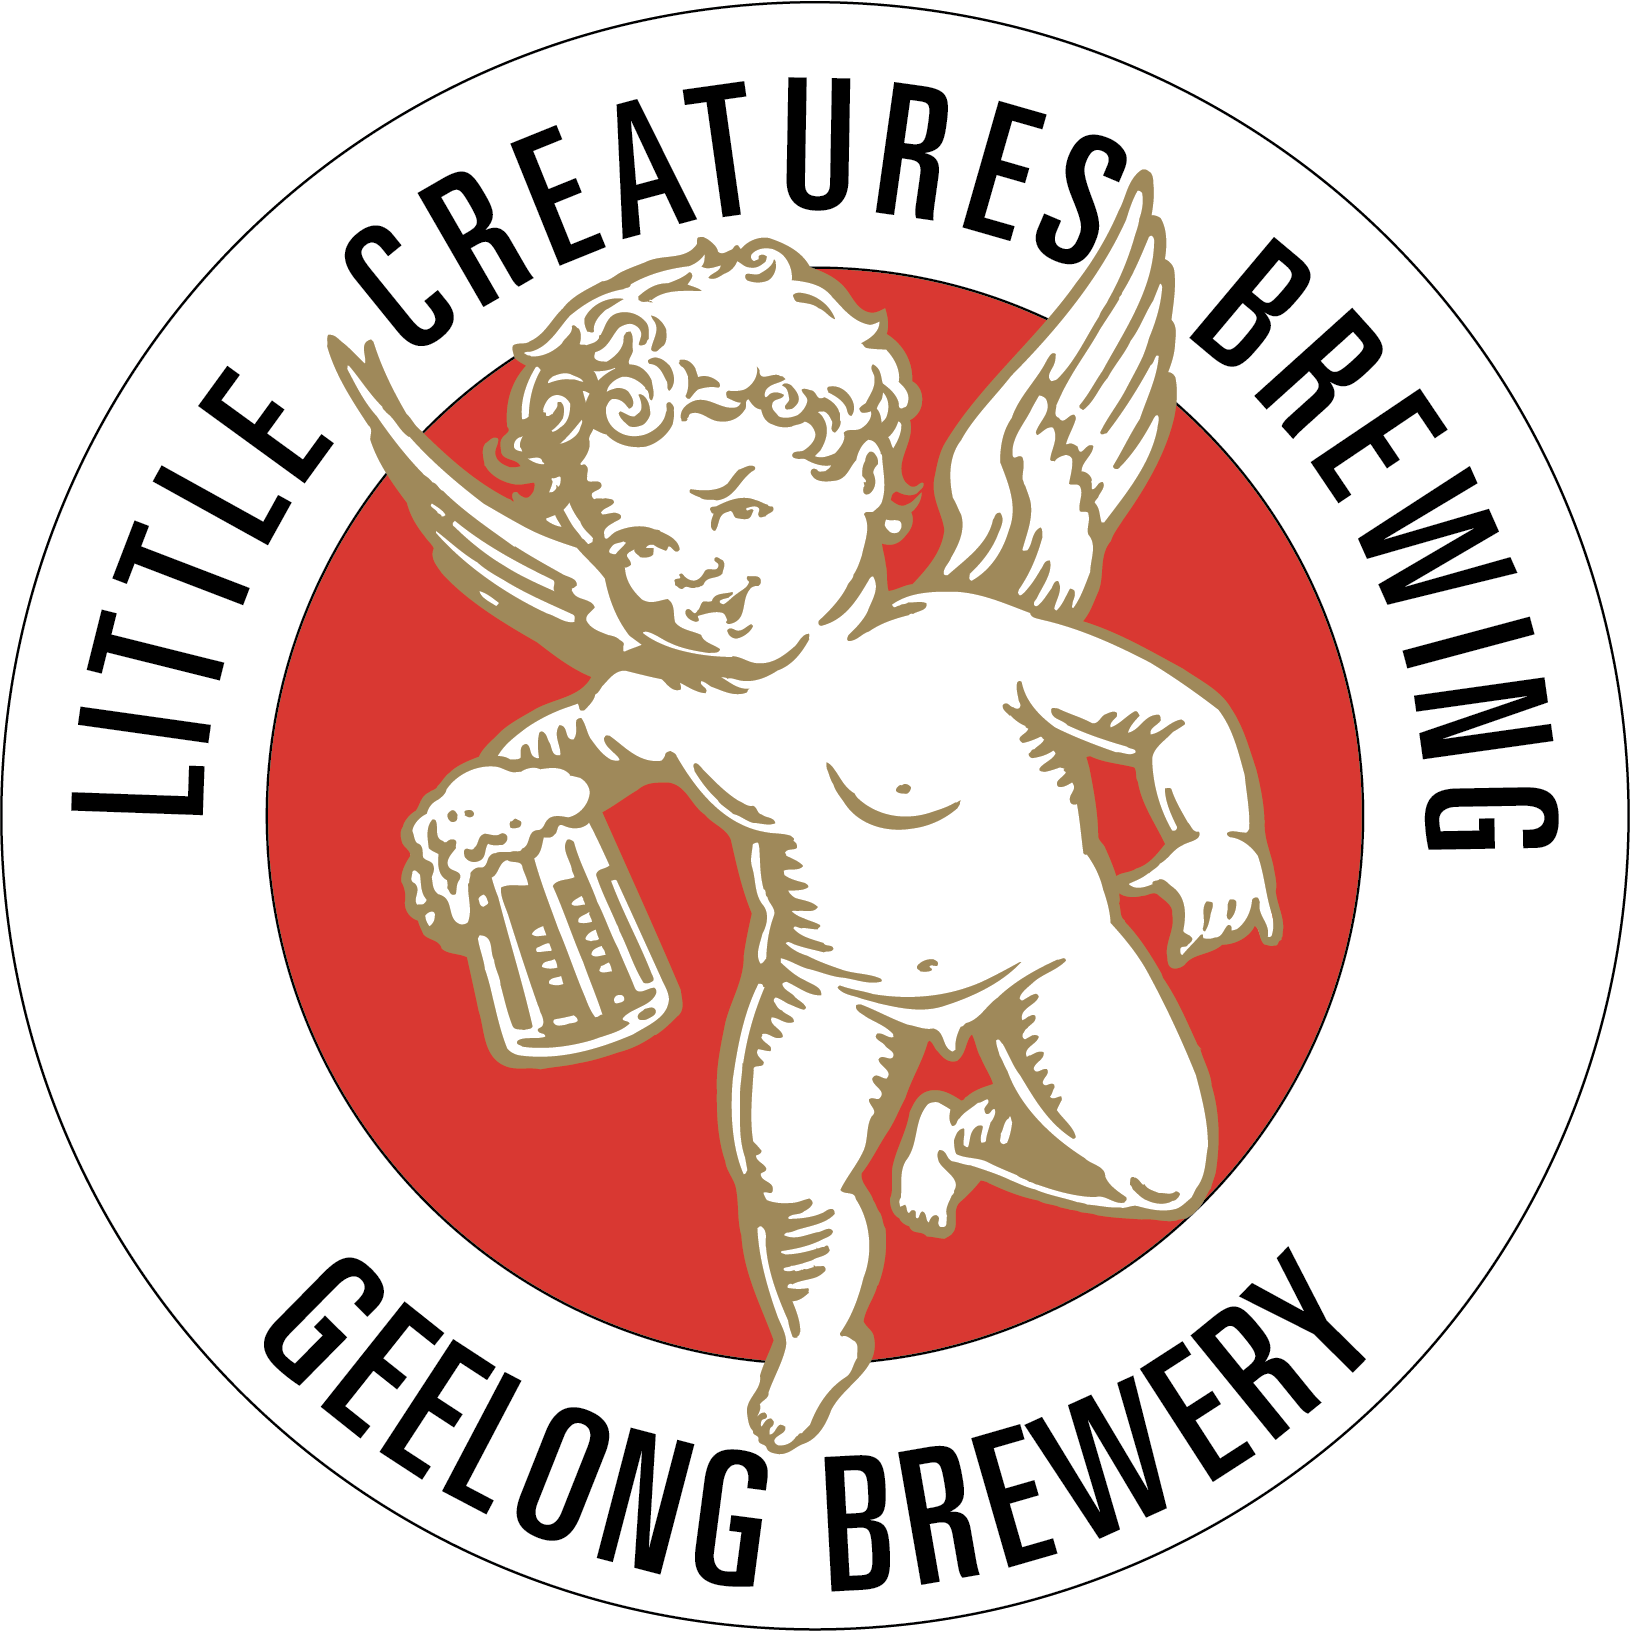 Little Creatures Geelong Brewery